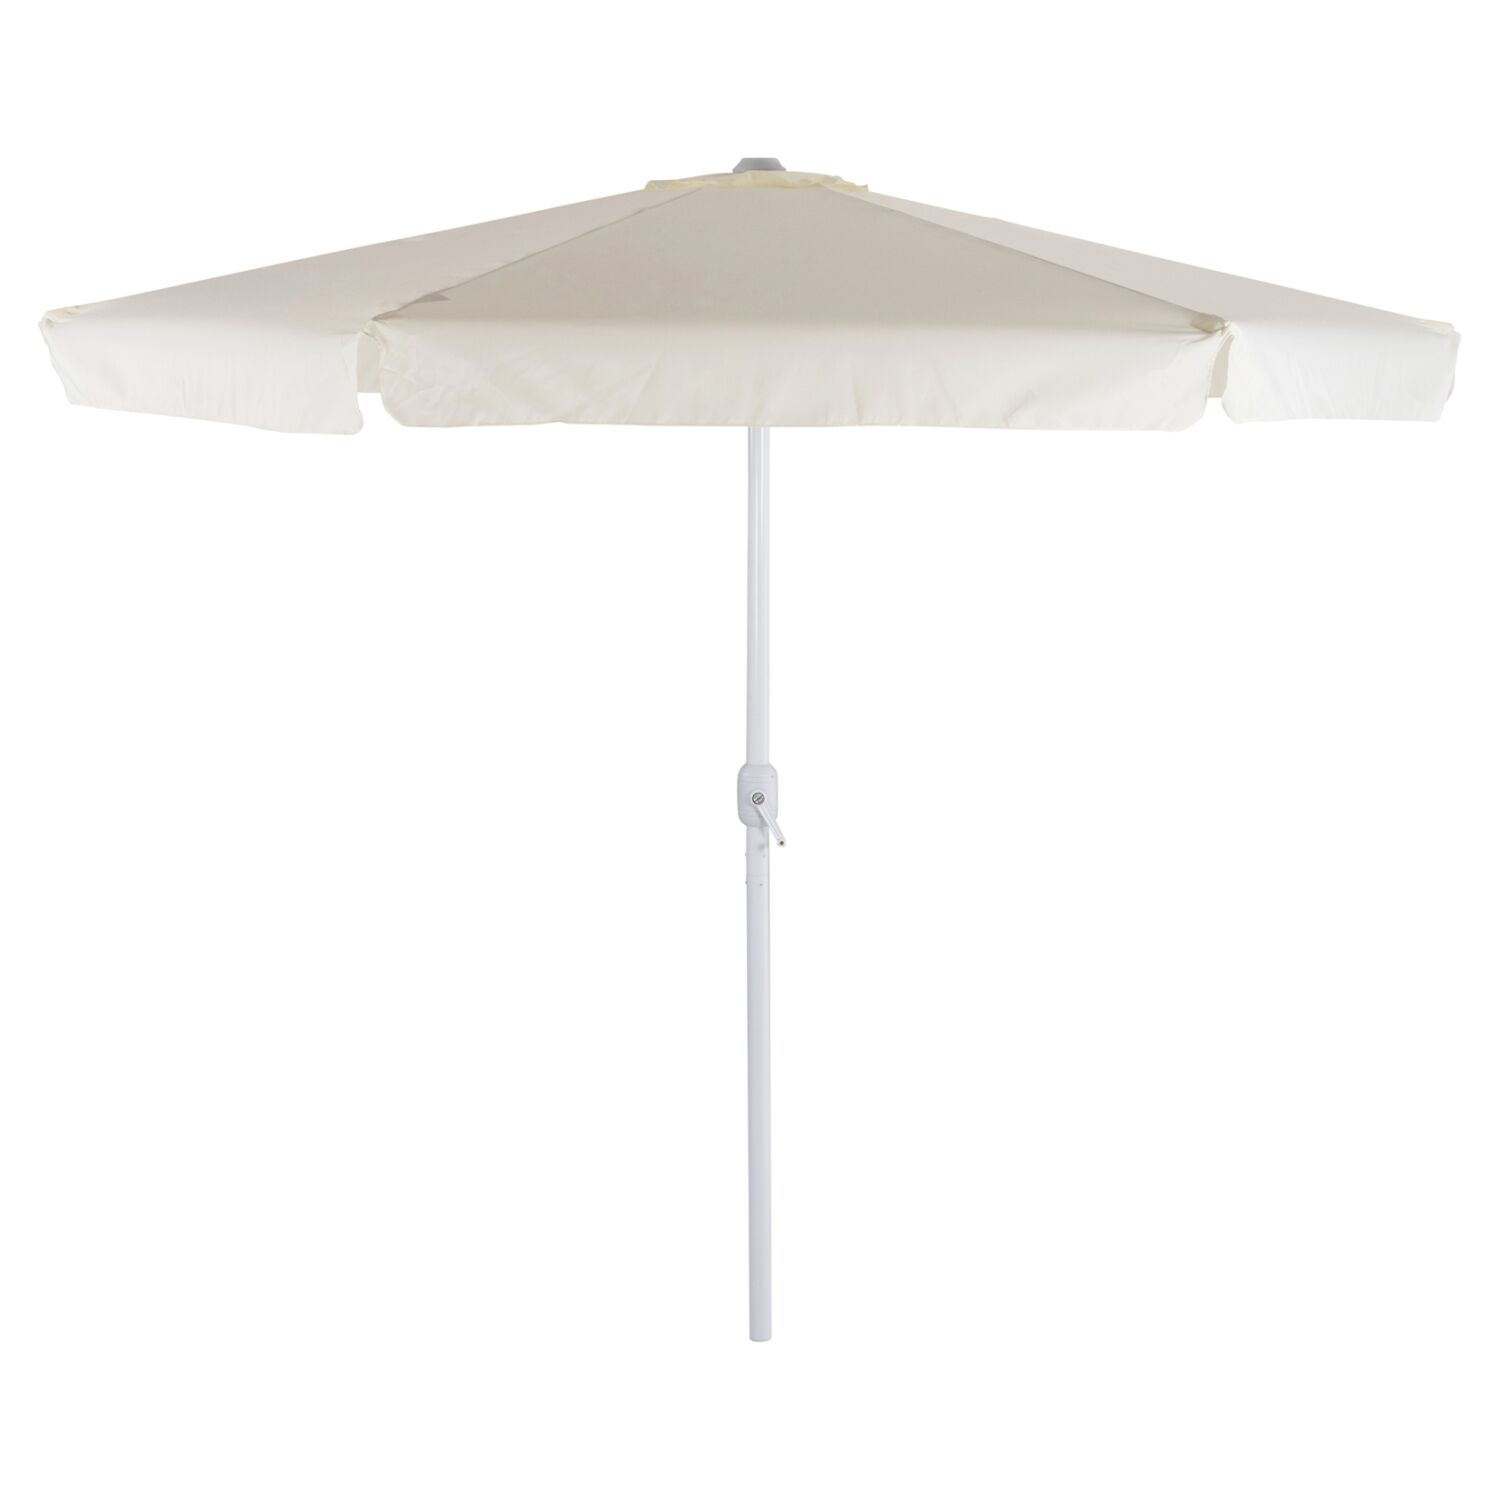 Umbrella D3,00x2,50Μ Aluminum beige color with side panel HM6003